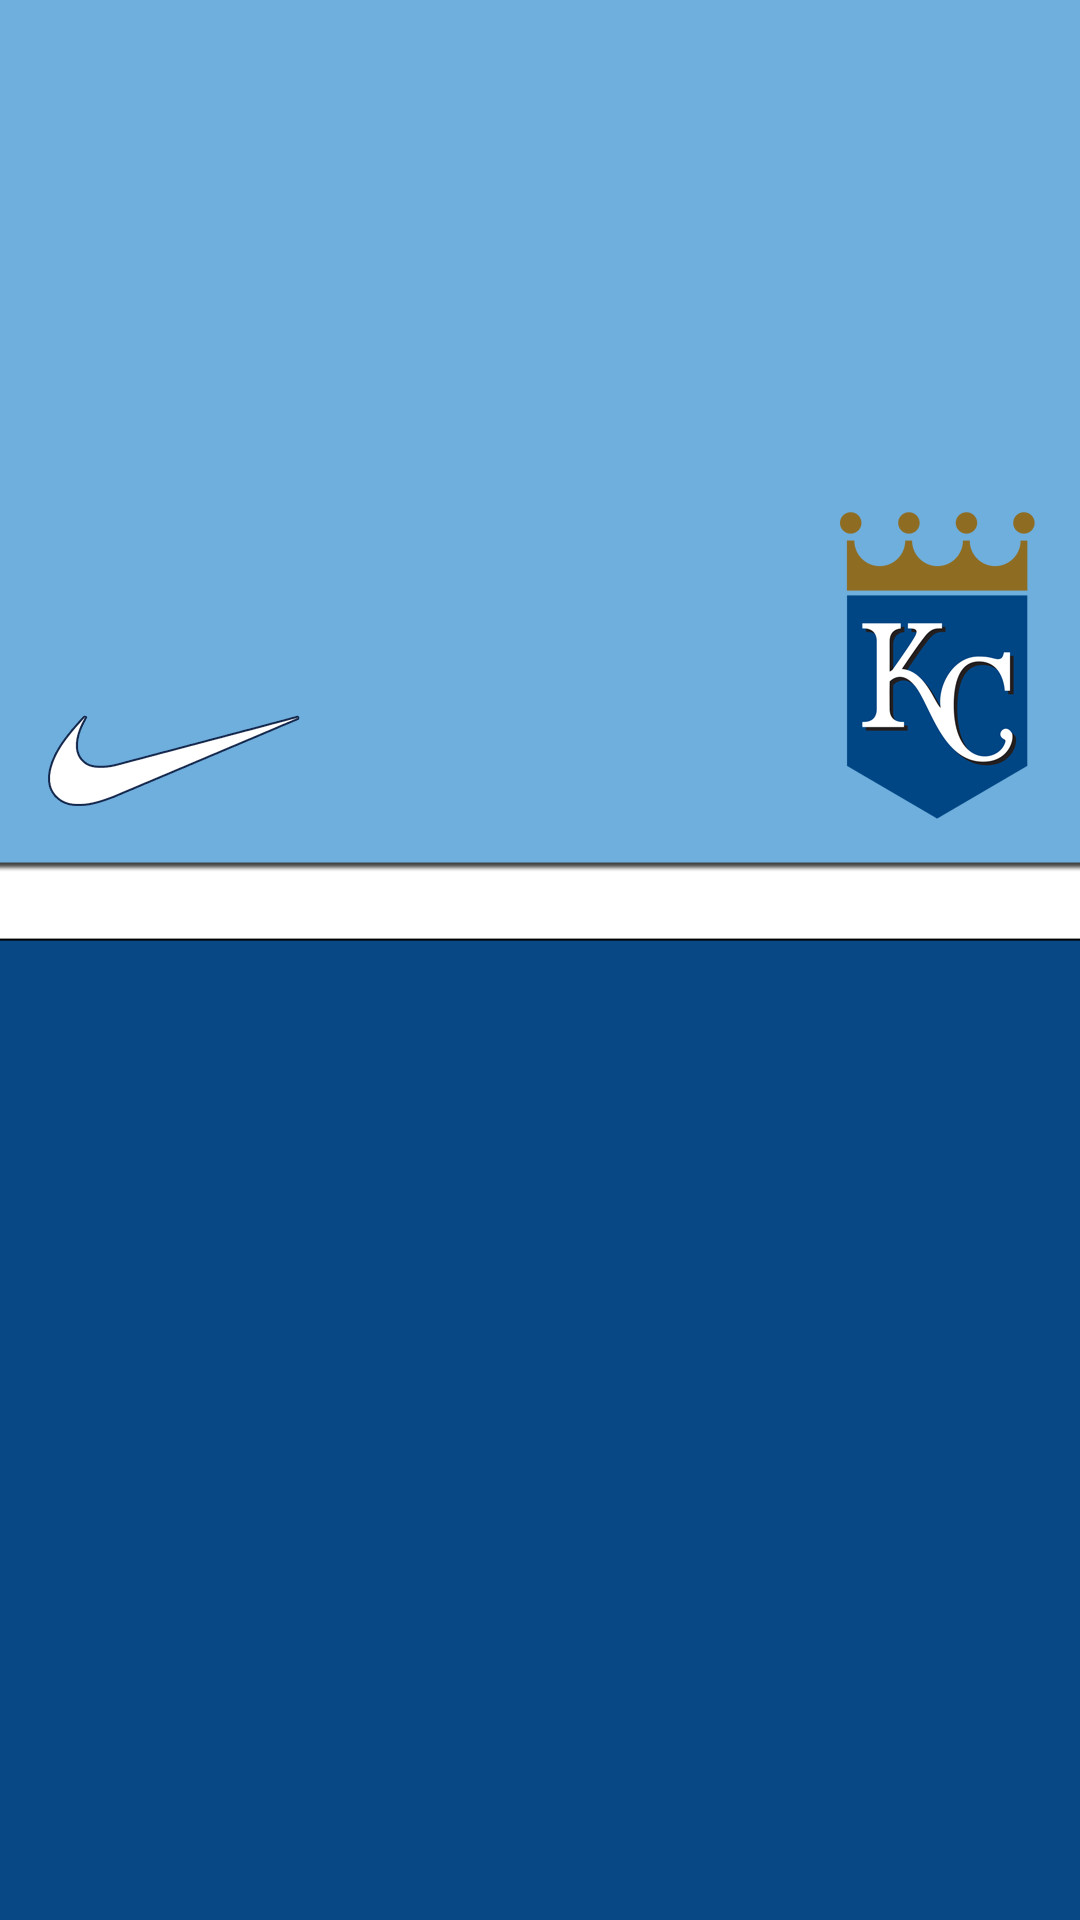 1080x1920 Kansas City Royals Nike IPhone wallpaper HD. Free desktop .